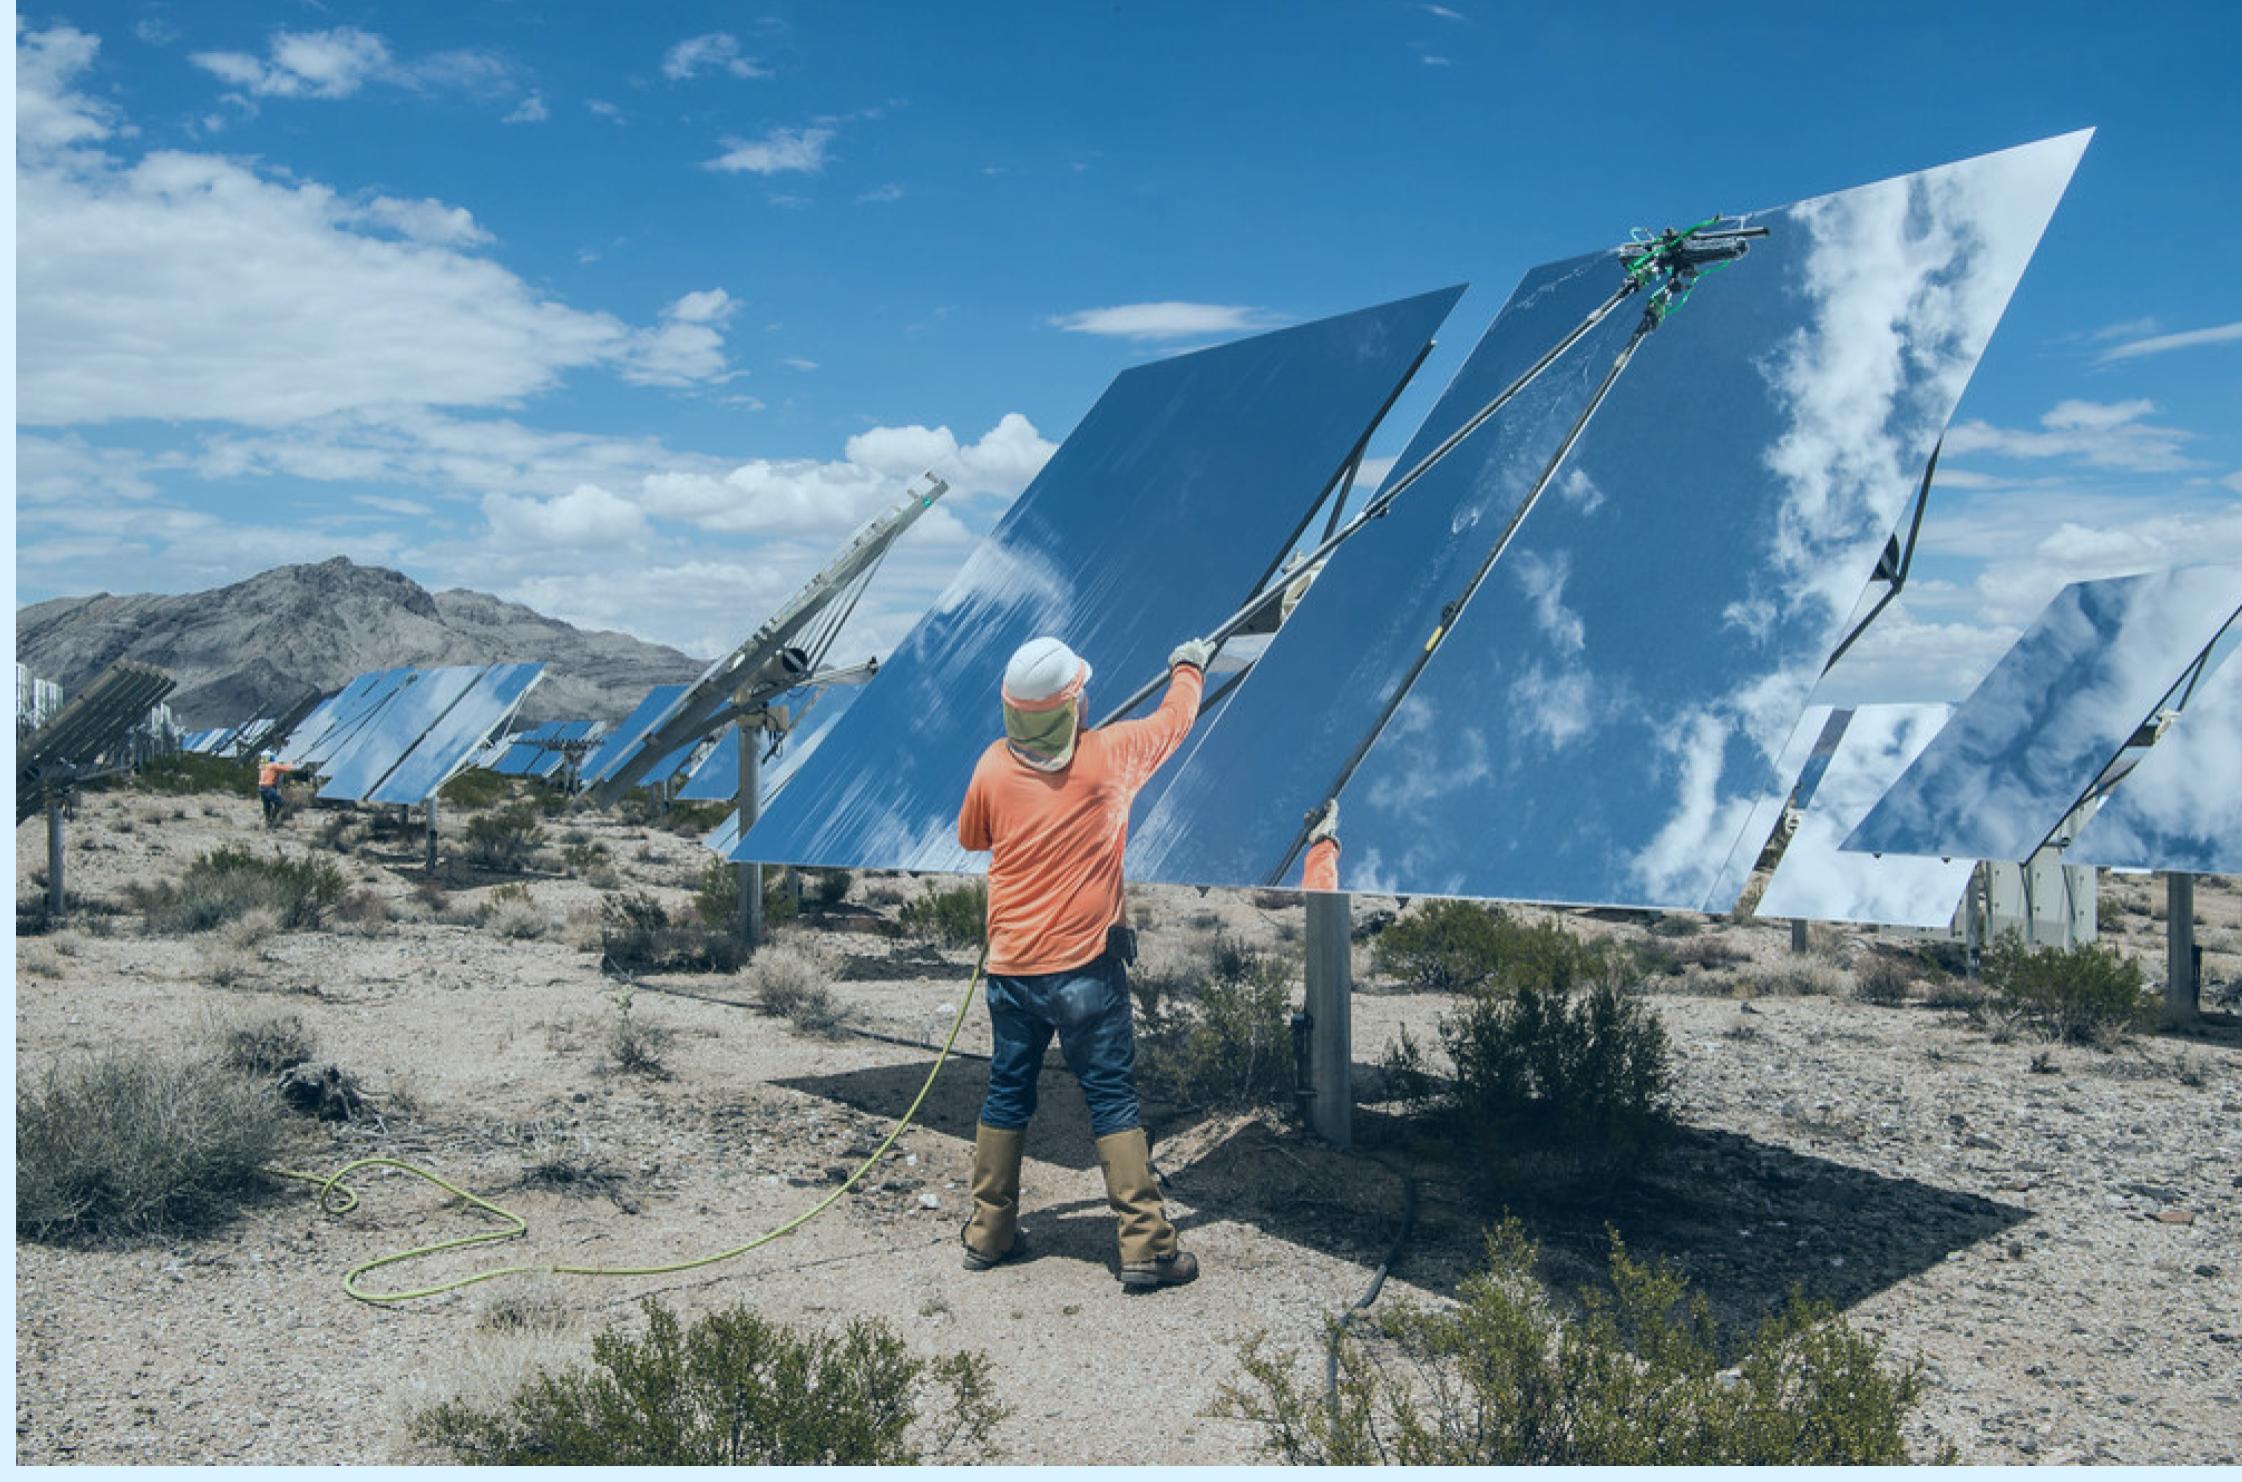 Solar worker cleans solar panels in a desert setting